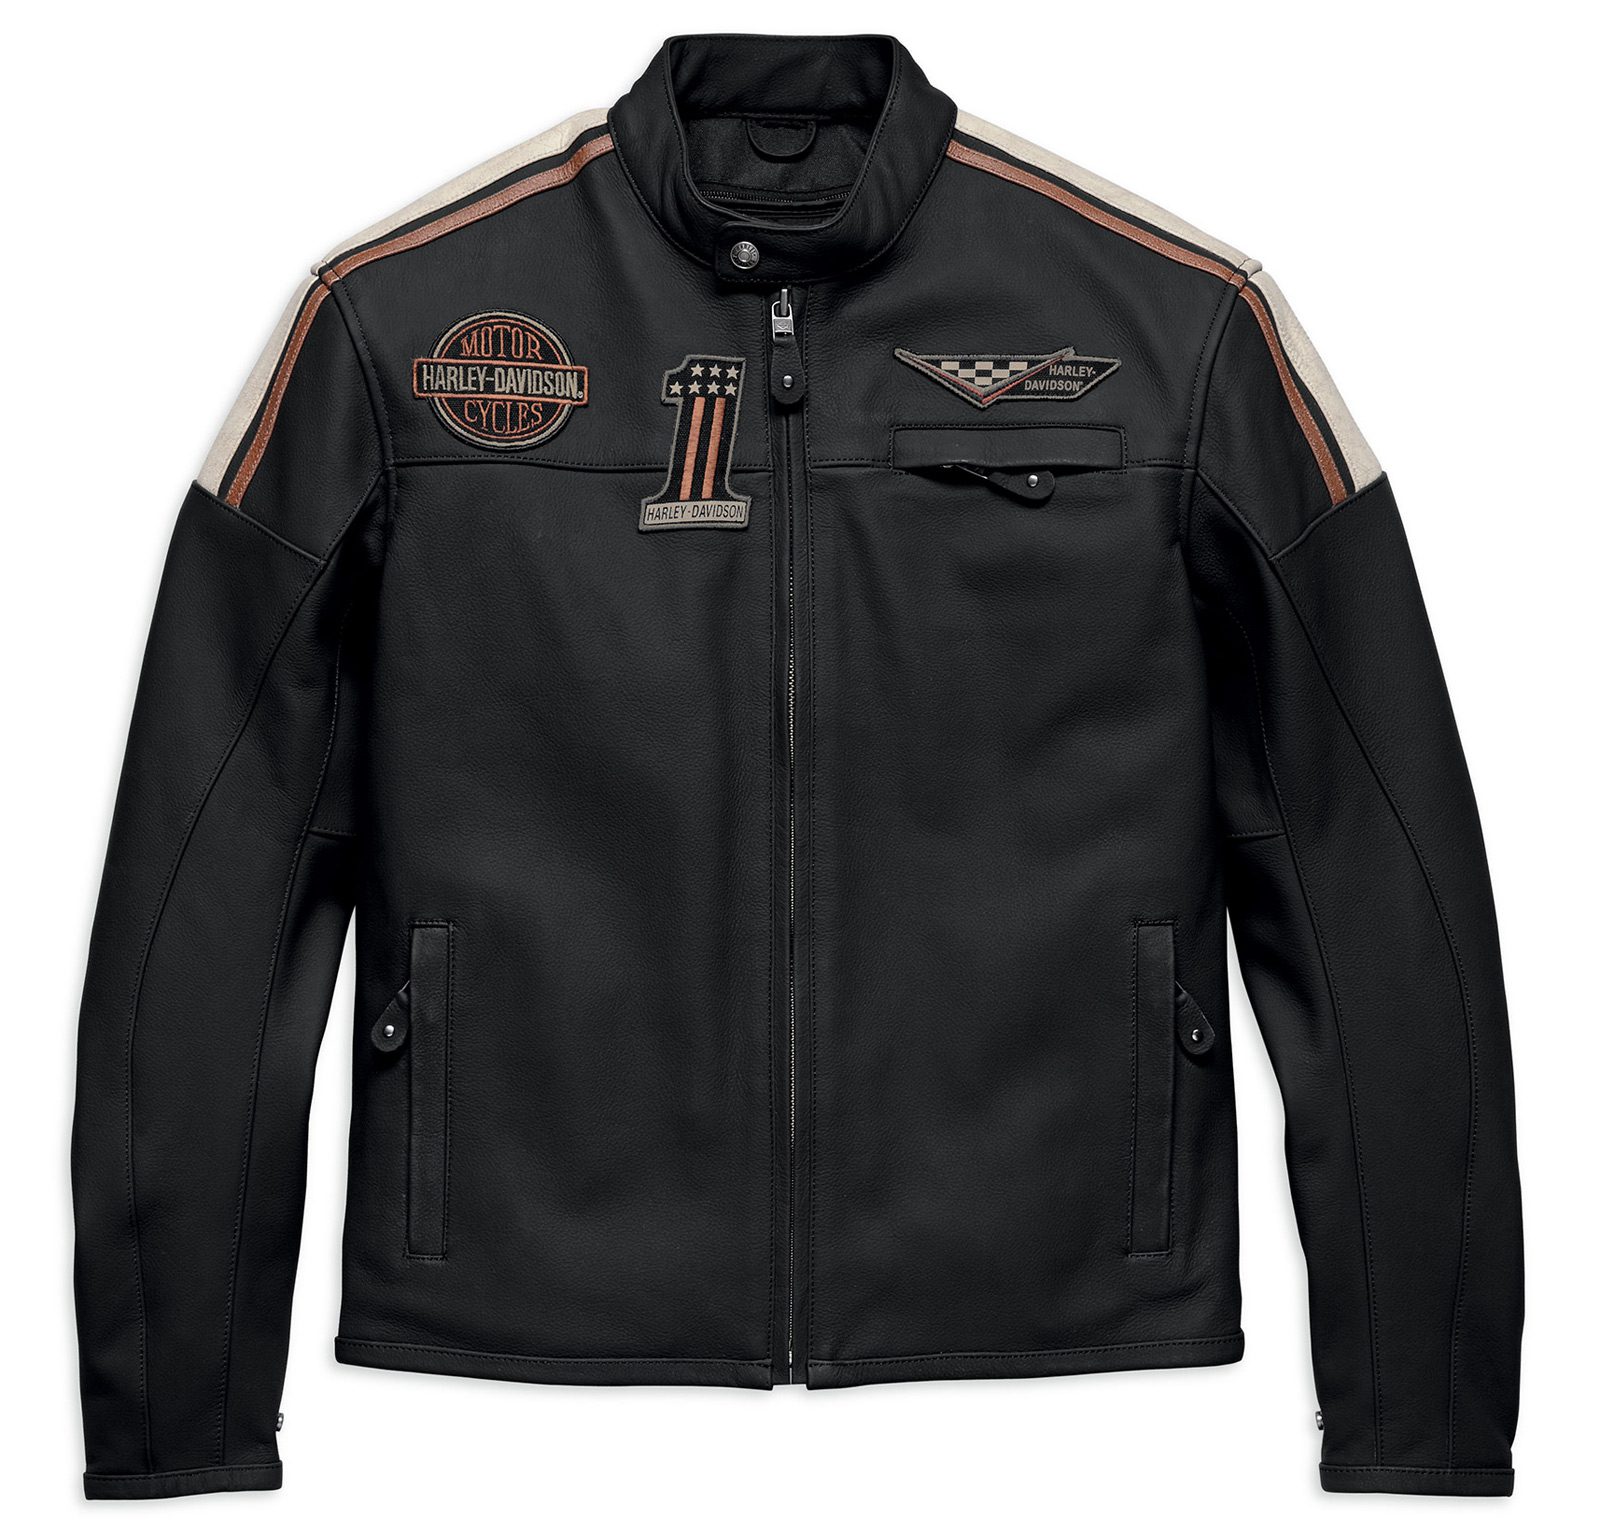 Gorgan Ce Leather Jacket Harley Davidson